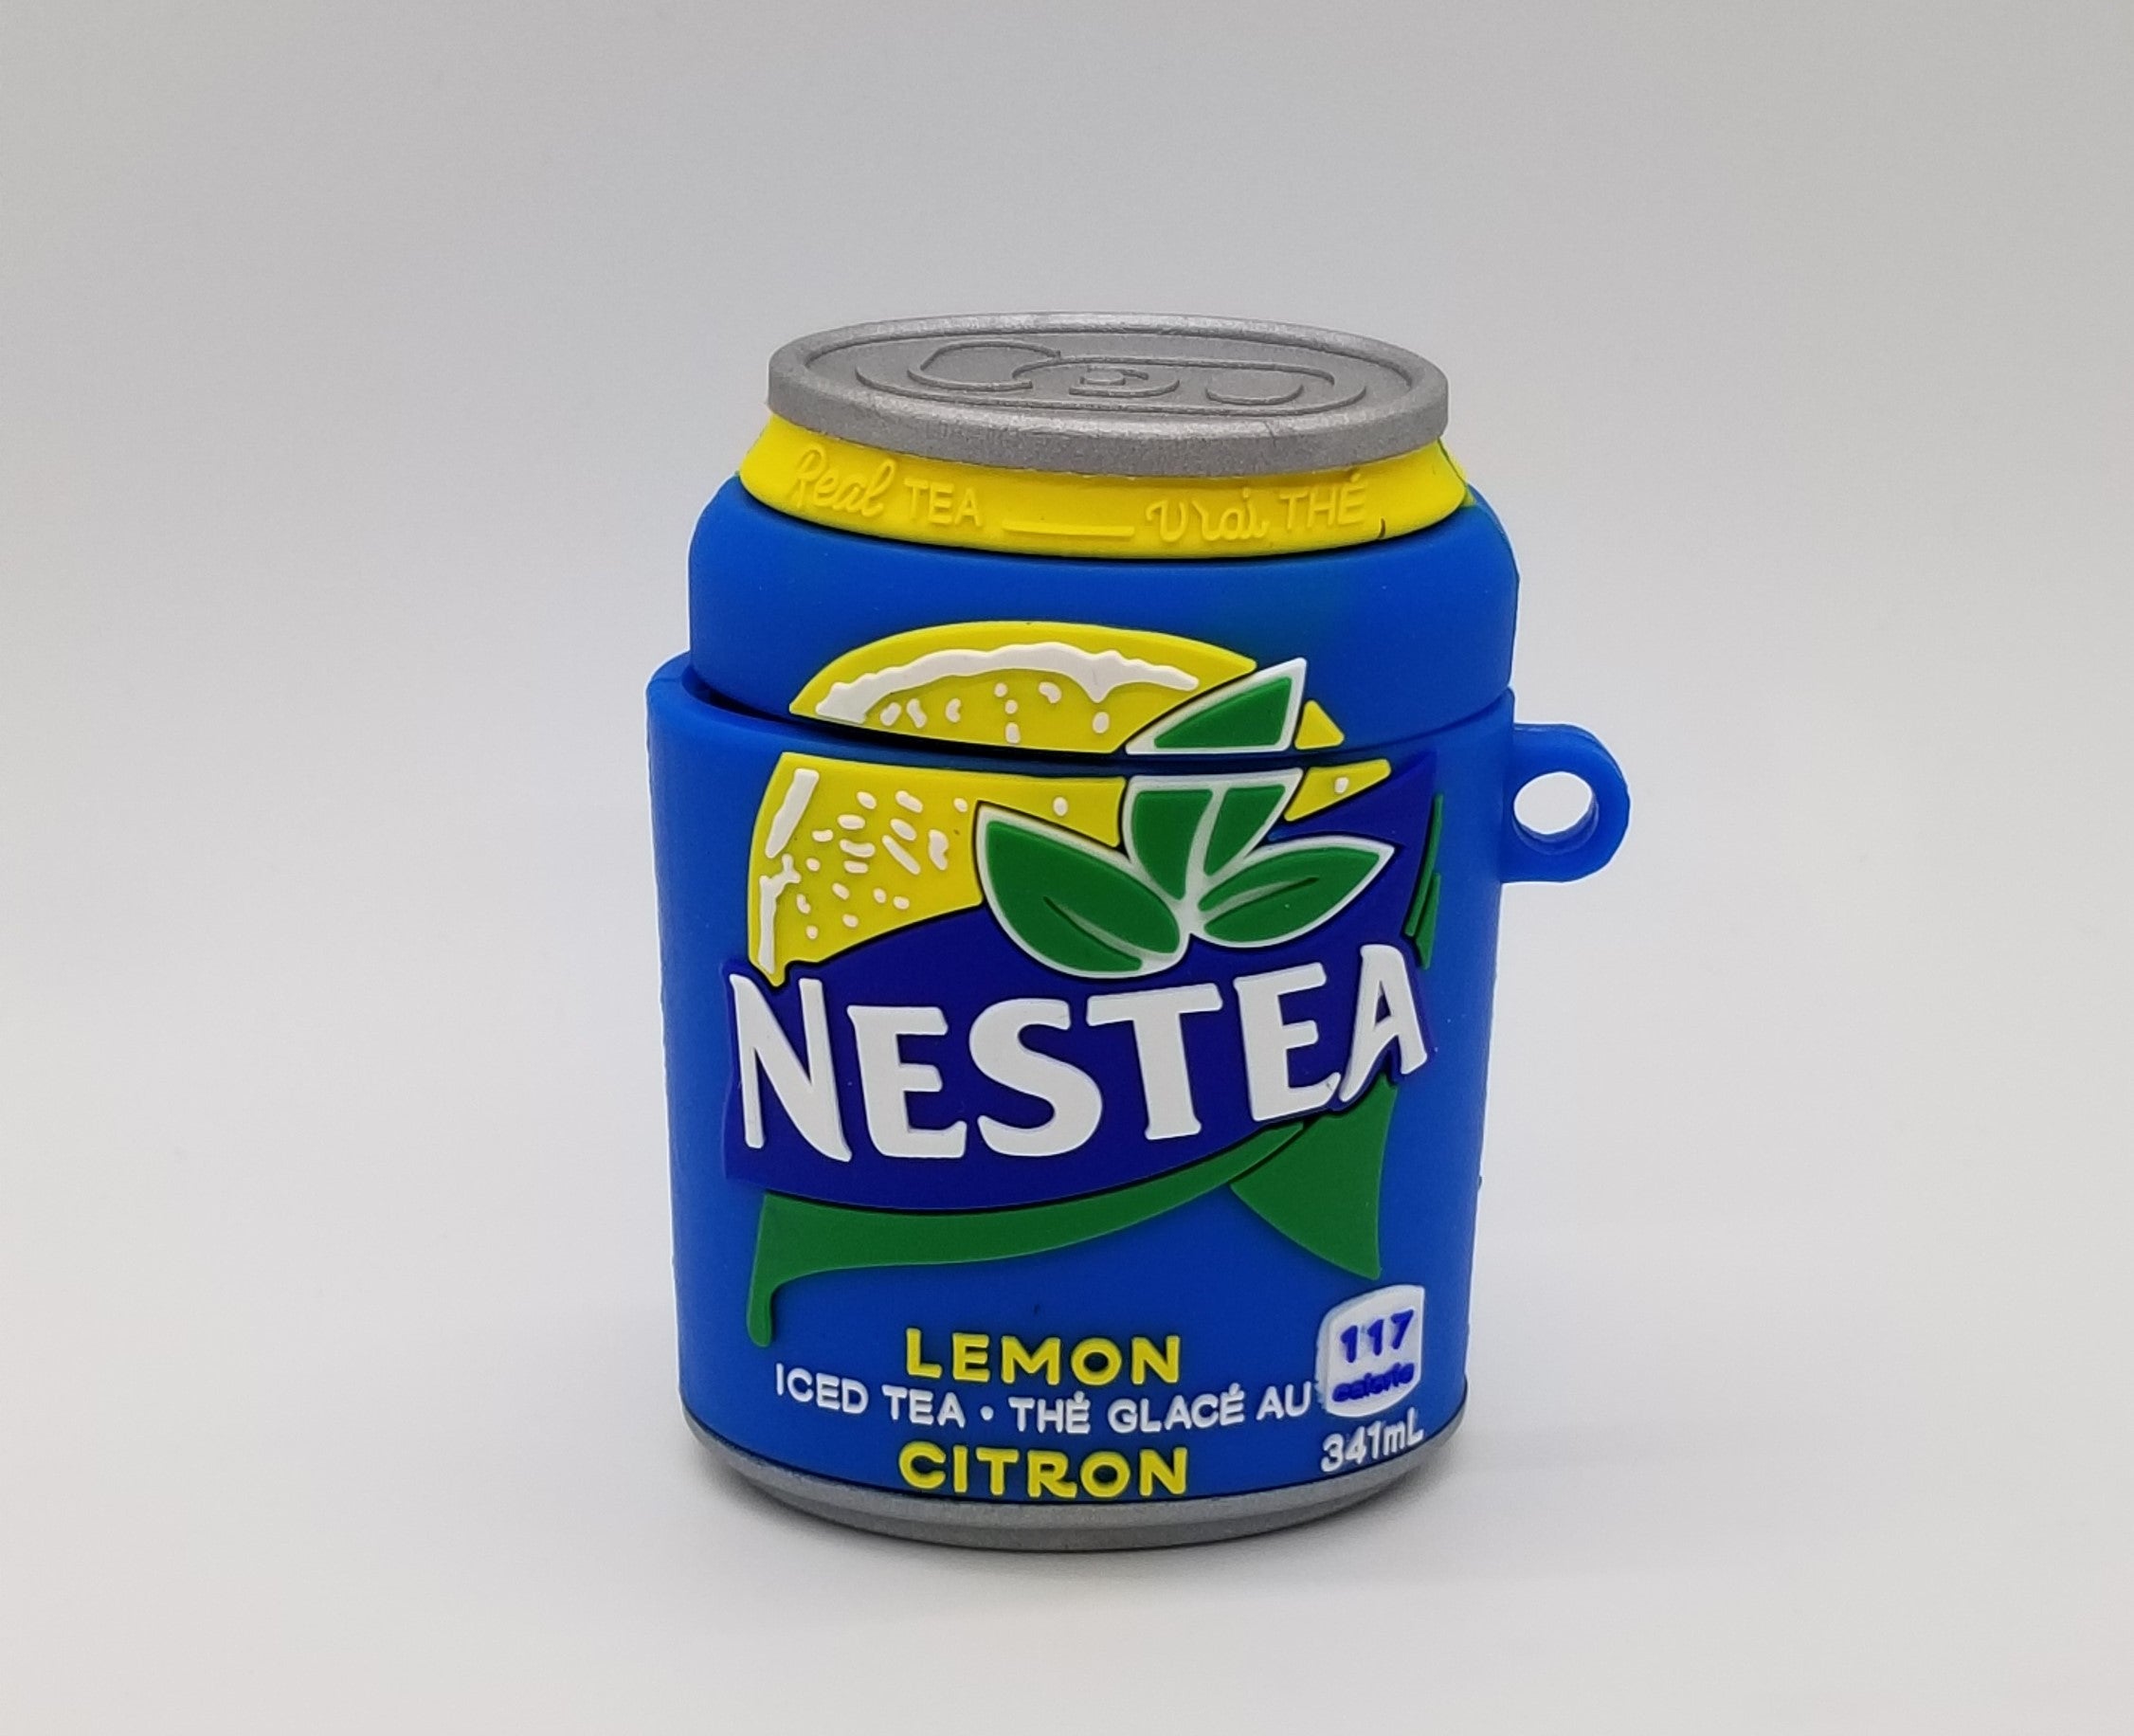 "Nestea Themed" Airpods Case Cover